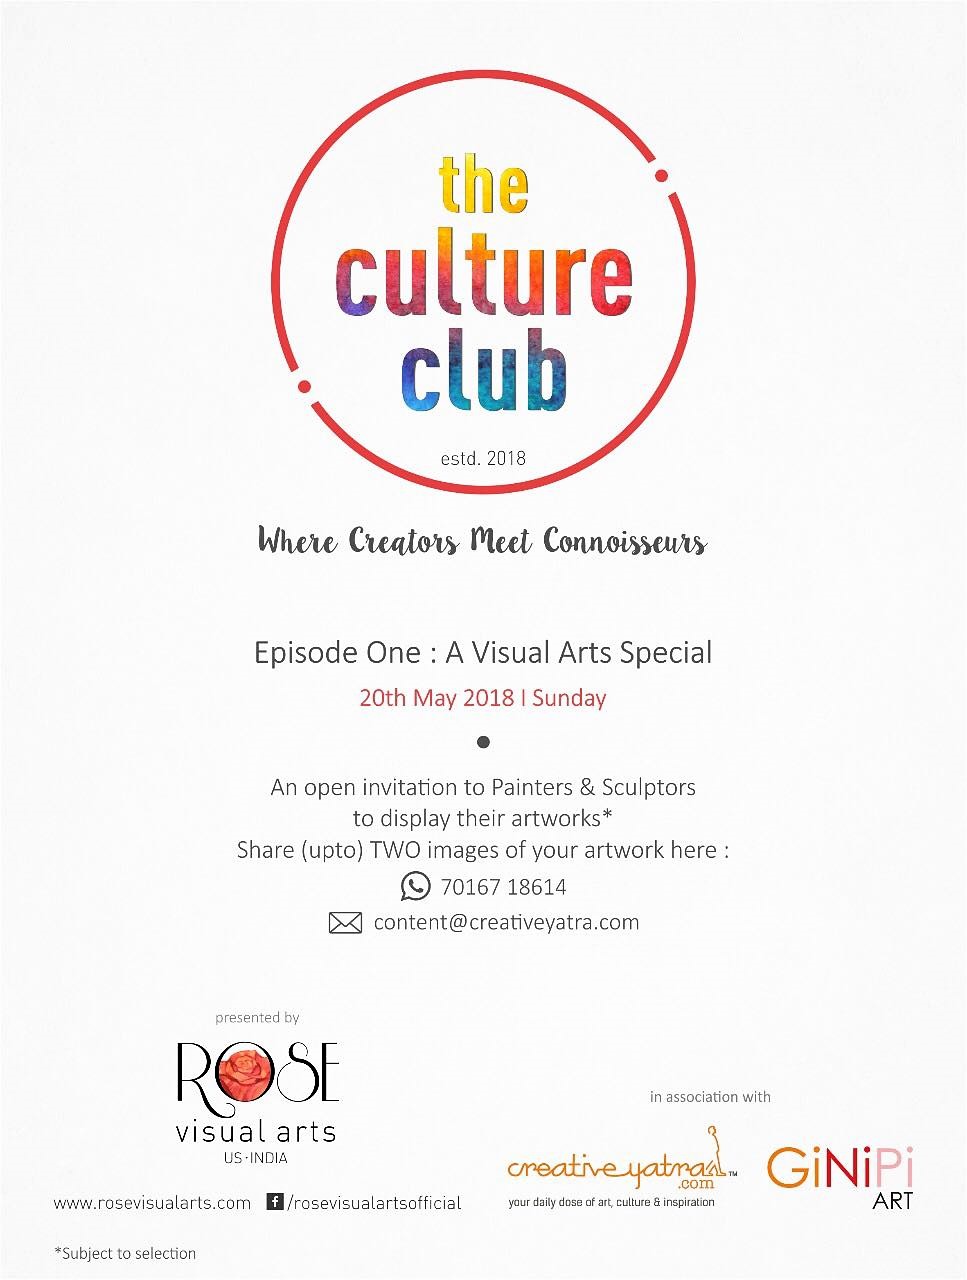 The Culture Club, Visual Arts, Ahmedabad